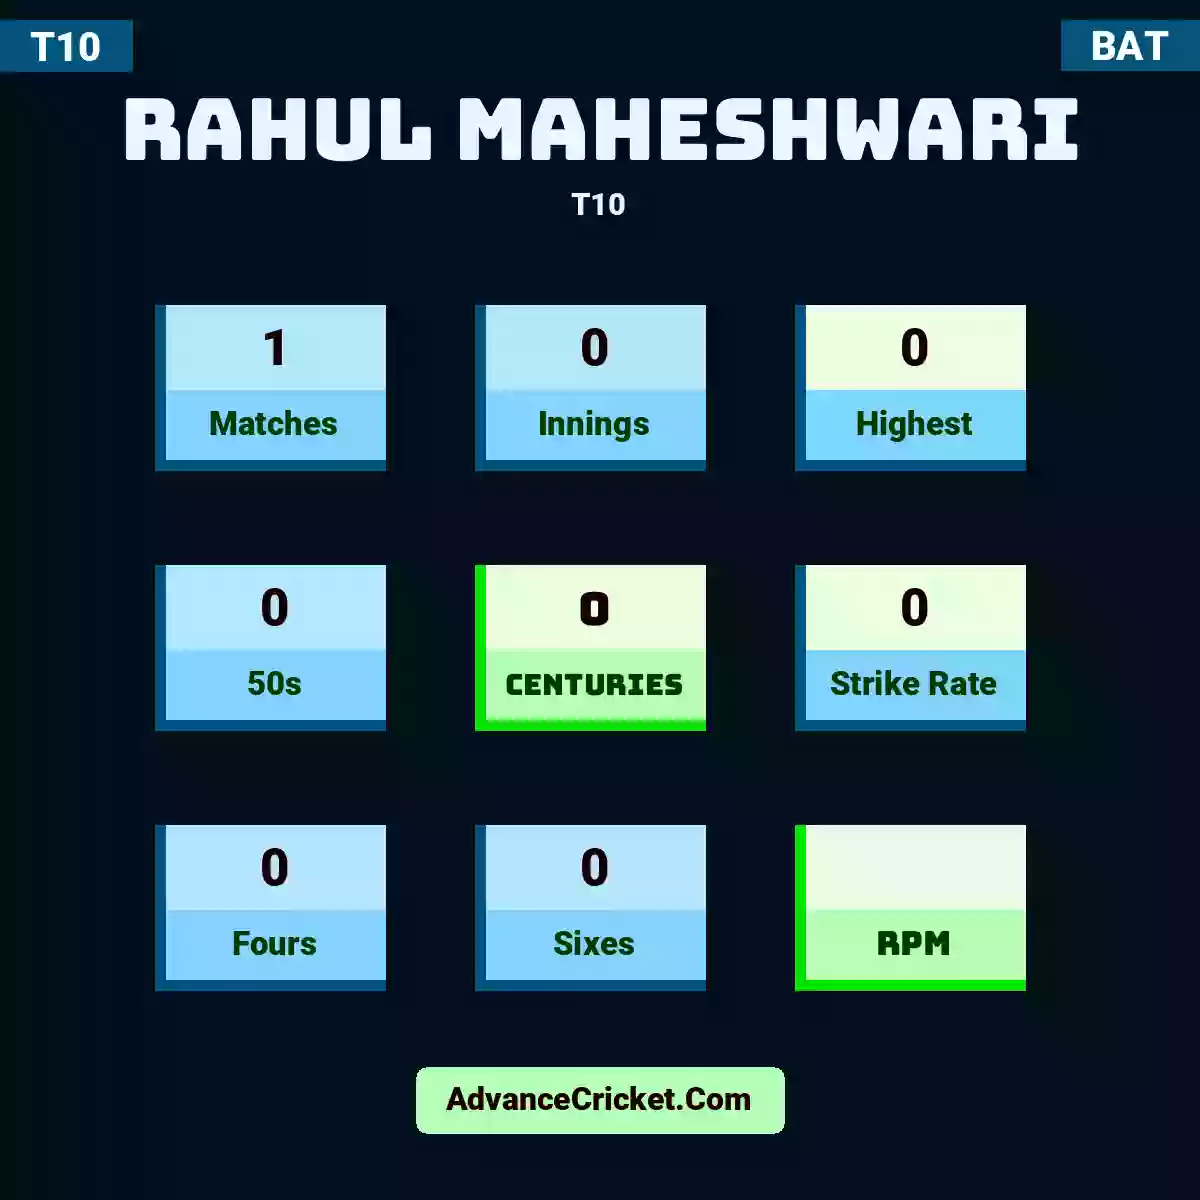 Rahul Maheshwari T10 , Rahul Maheshwari played 1 matches, scored 0 runs as highest, 0 half-centuries, and 0 centuries, with a strike rate of 0. R.Maheshwari hit 0 fours and 0 sixes.